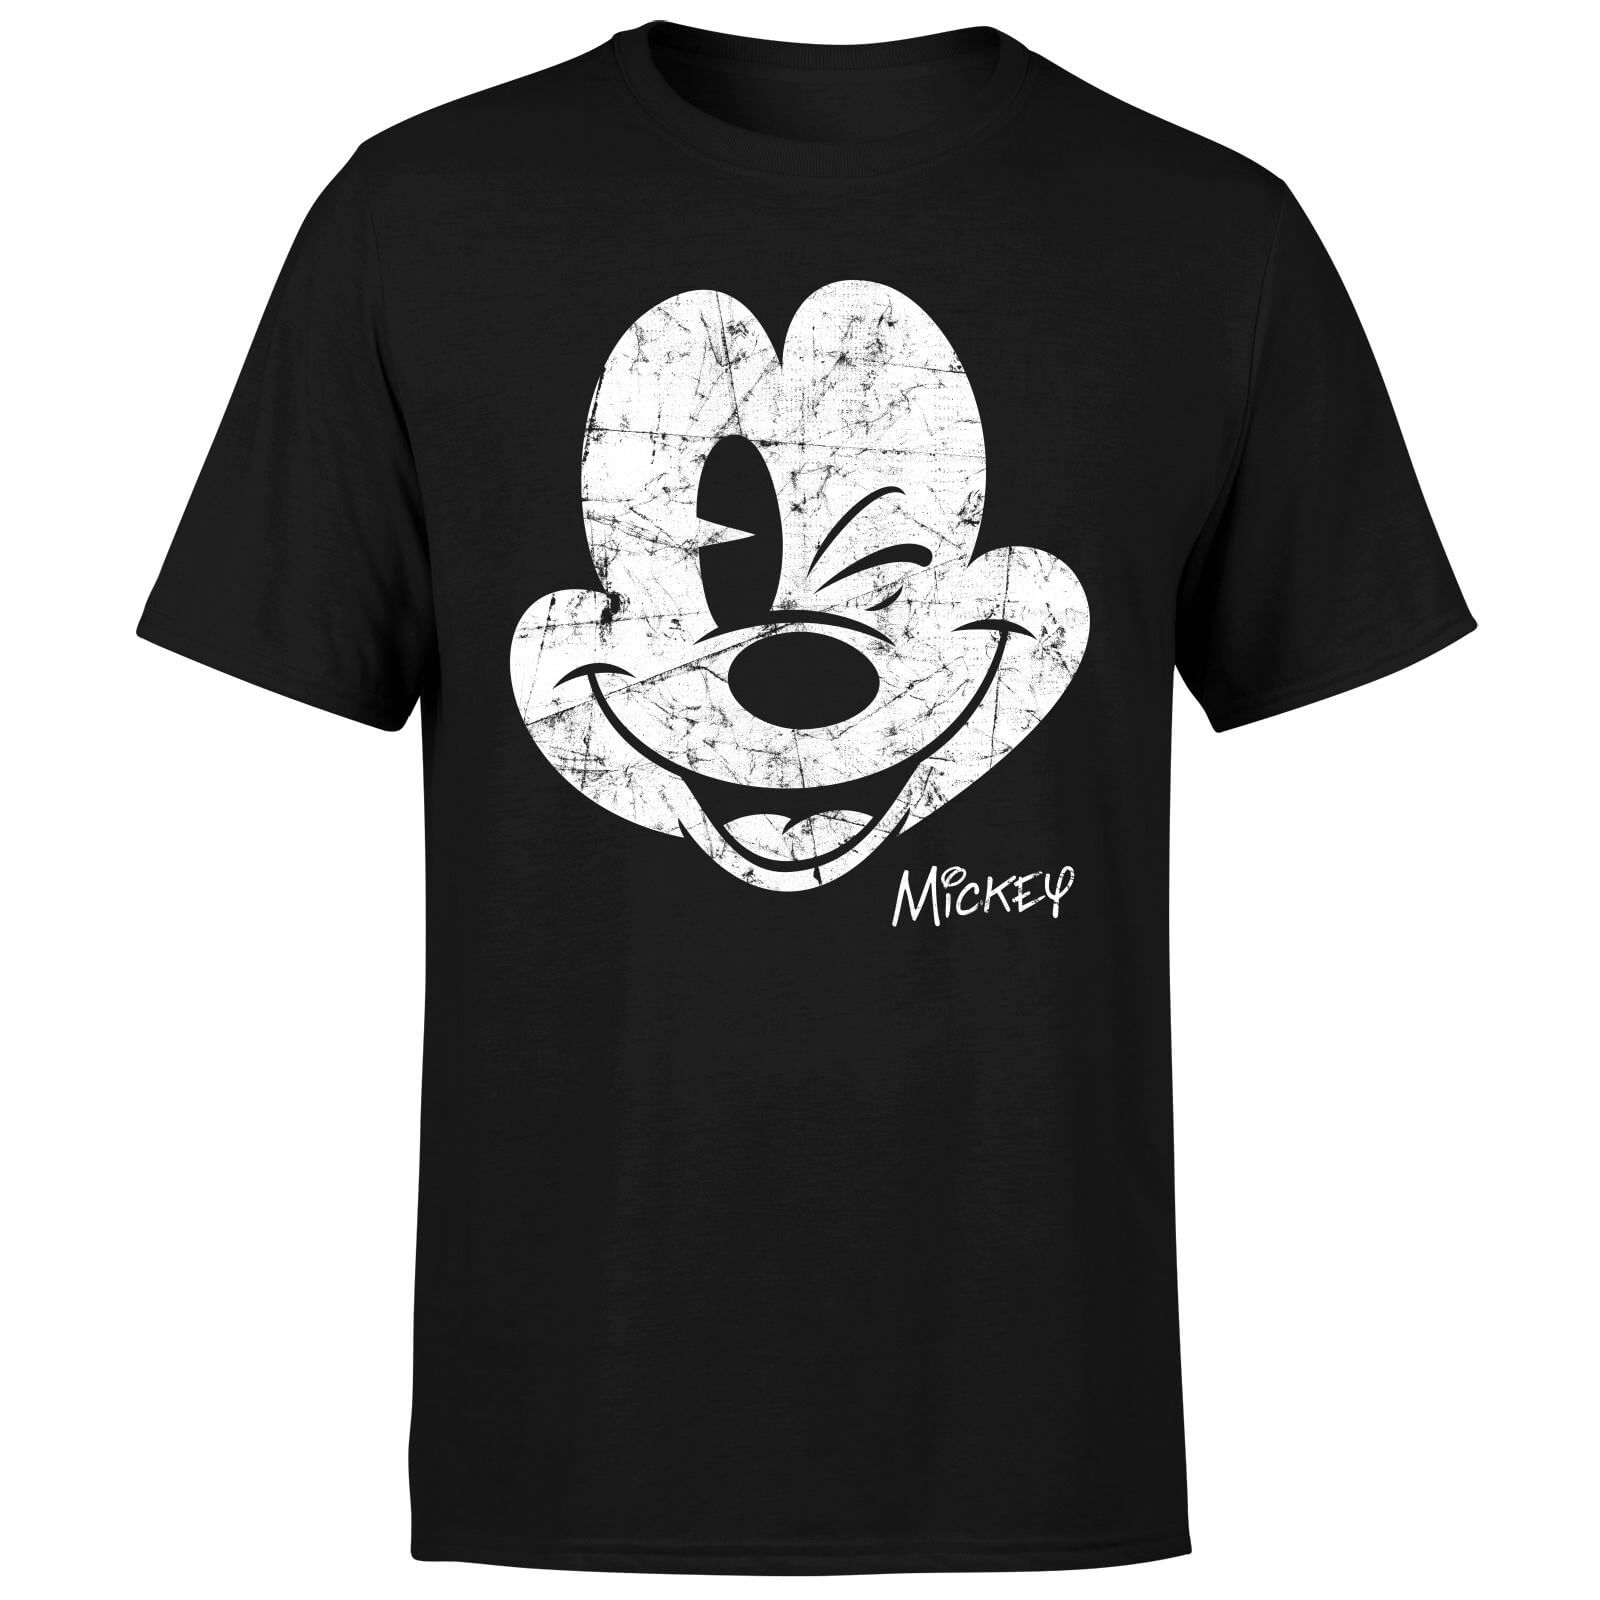 Disney Mickey Mouse Worn Face T-Shirt - Black - 4XL